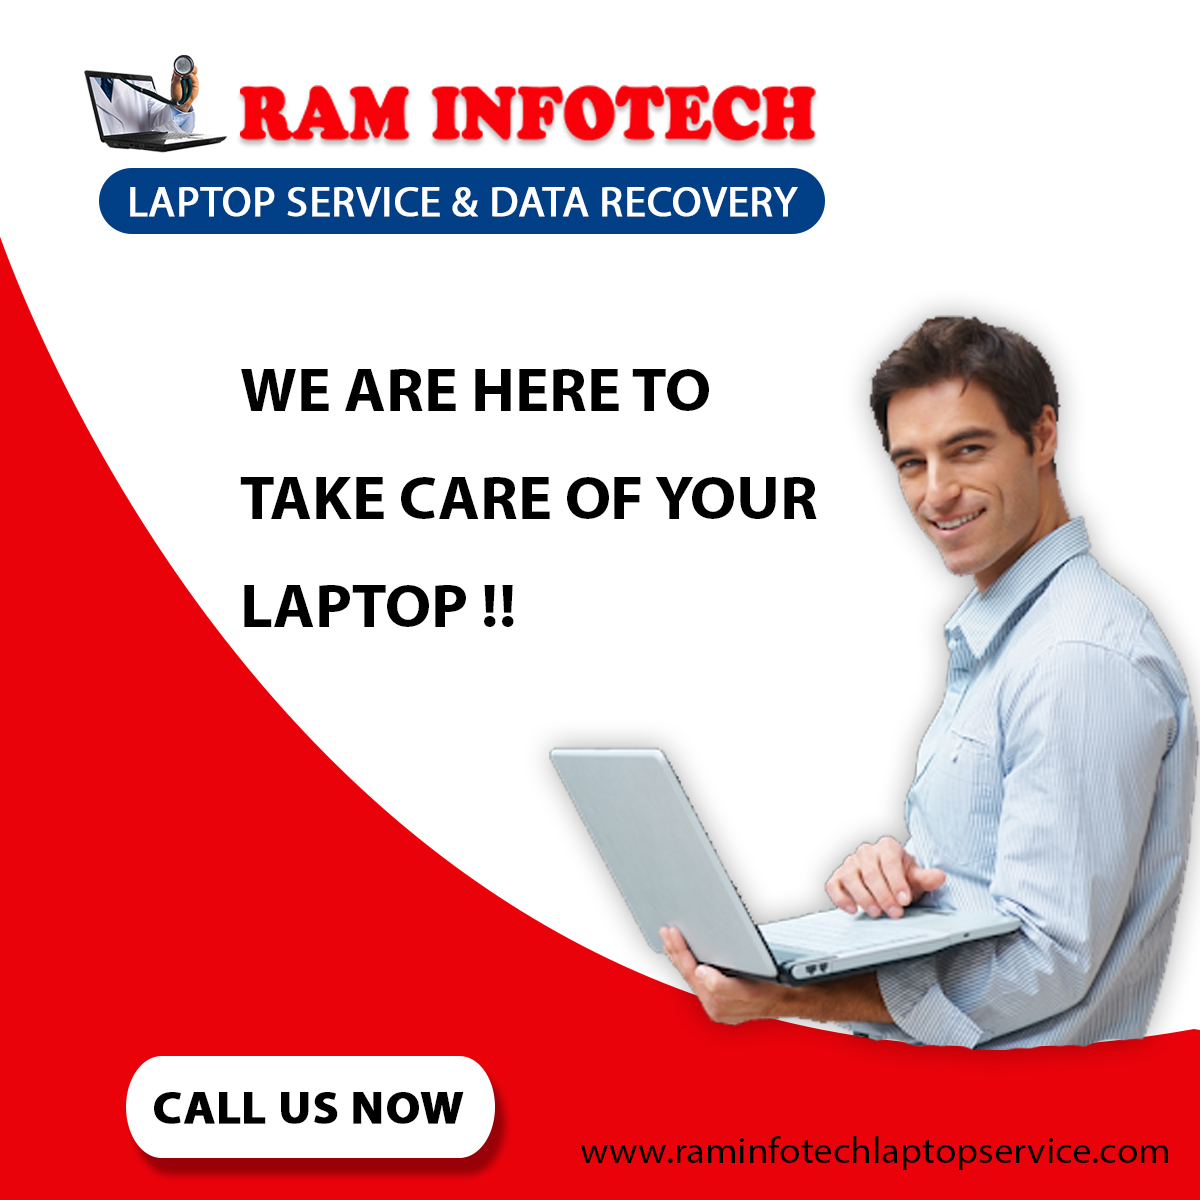 Laptop Service Center in Adyar